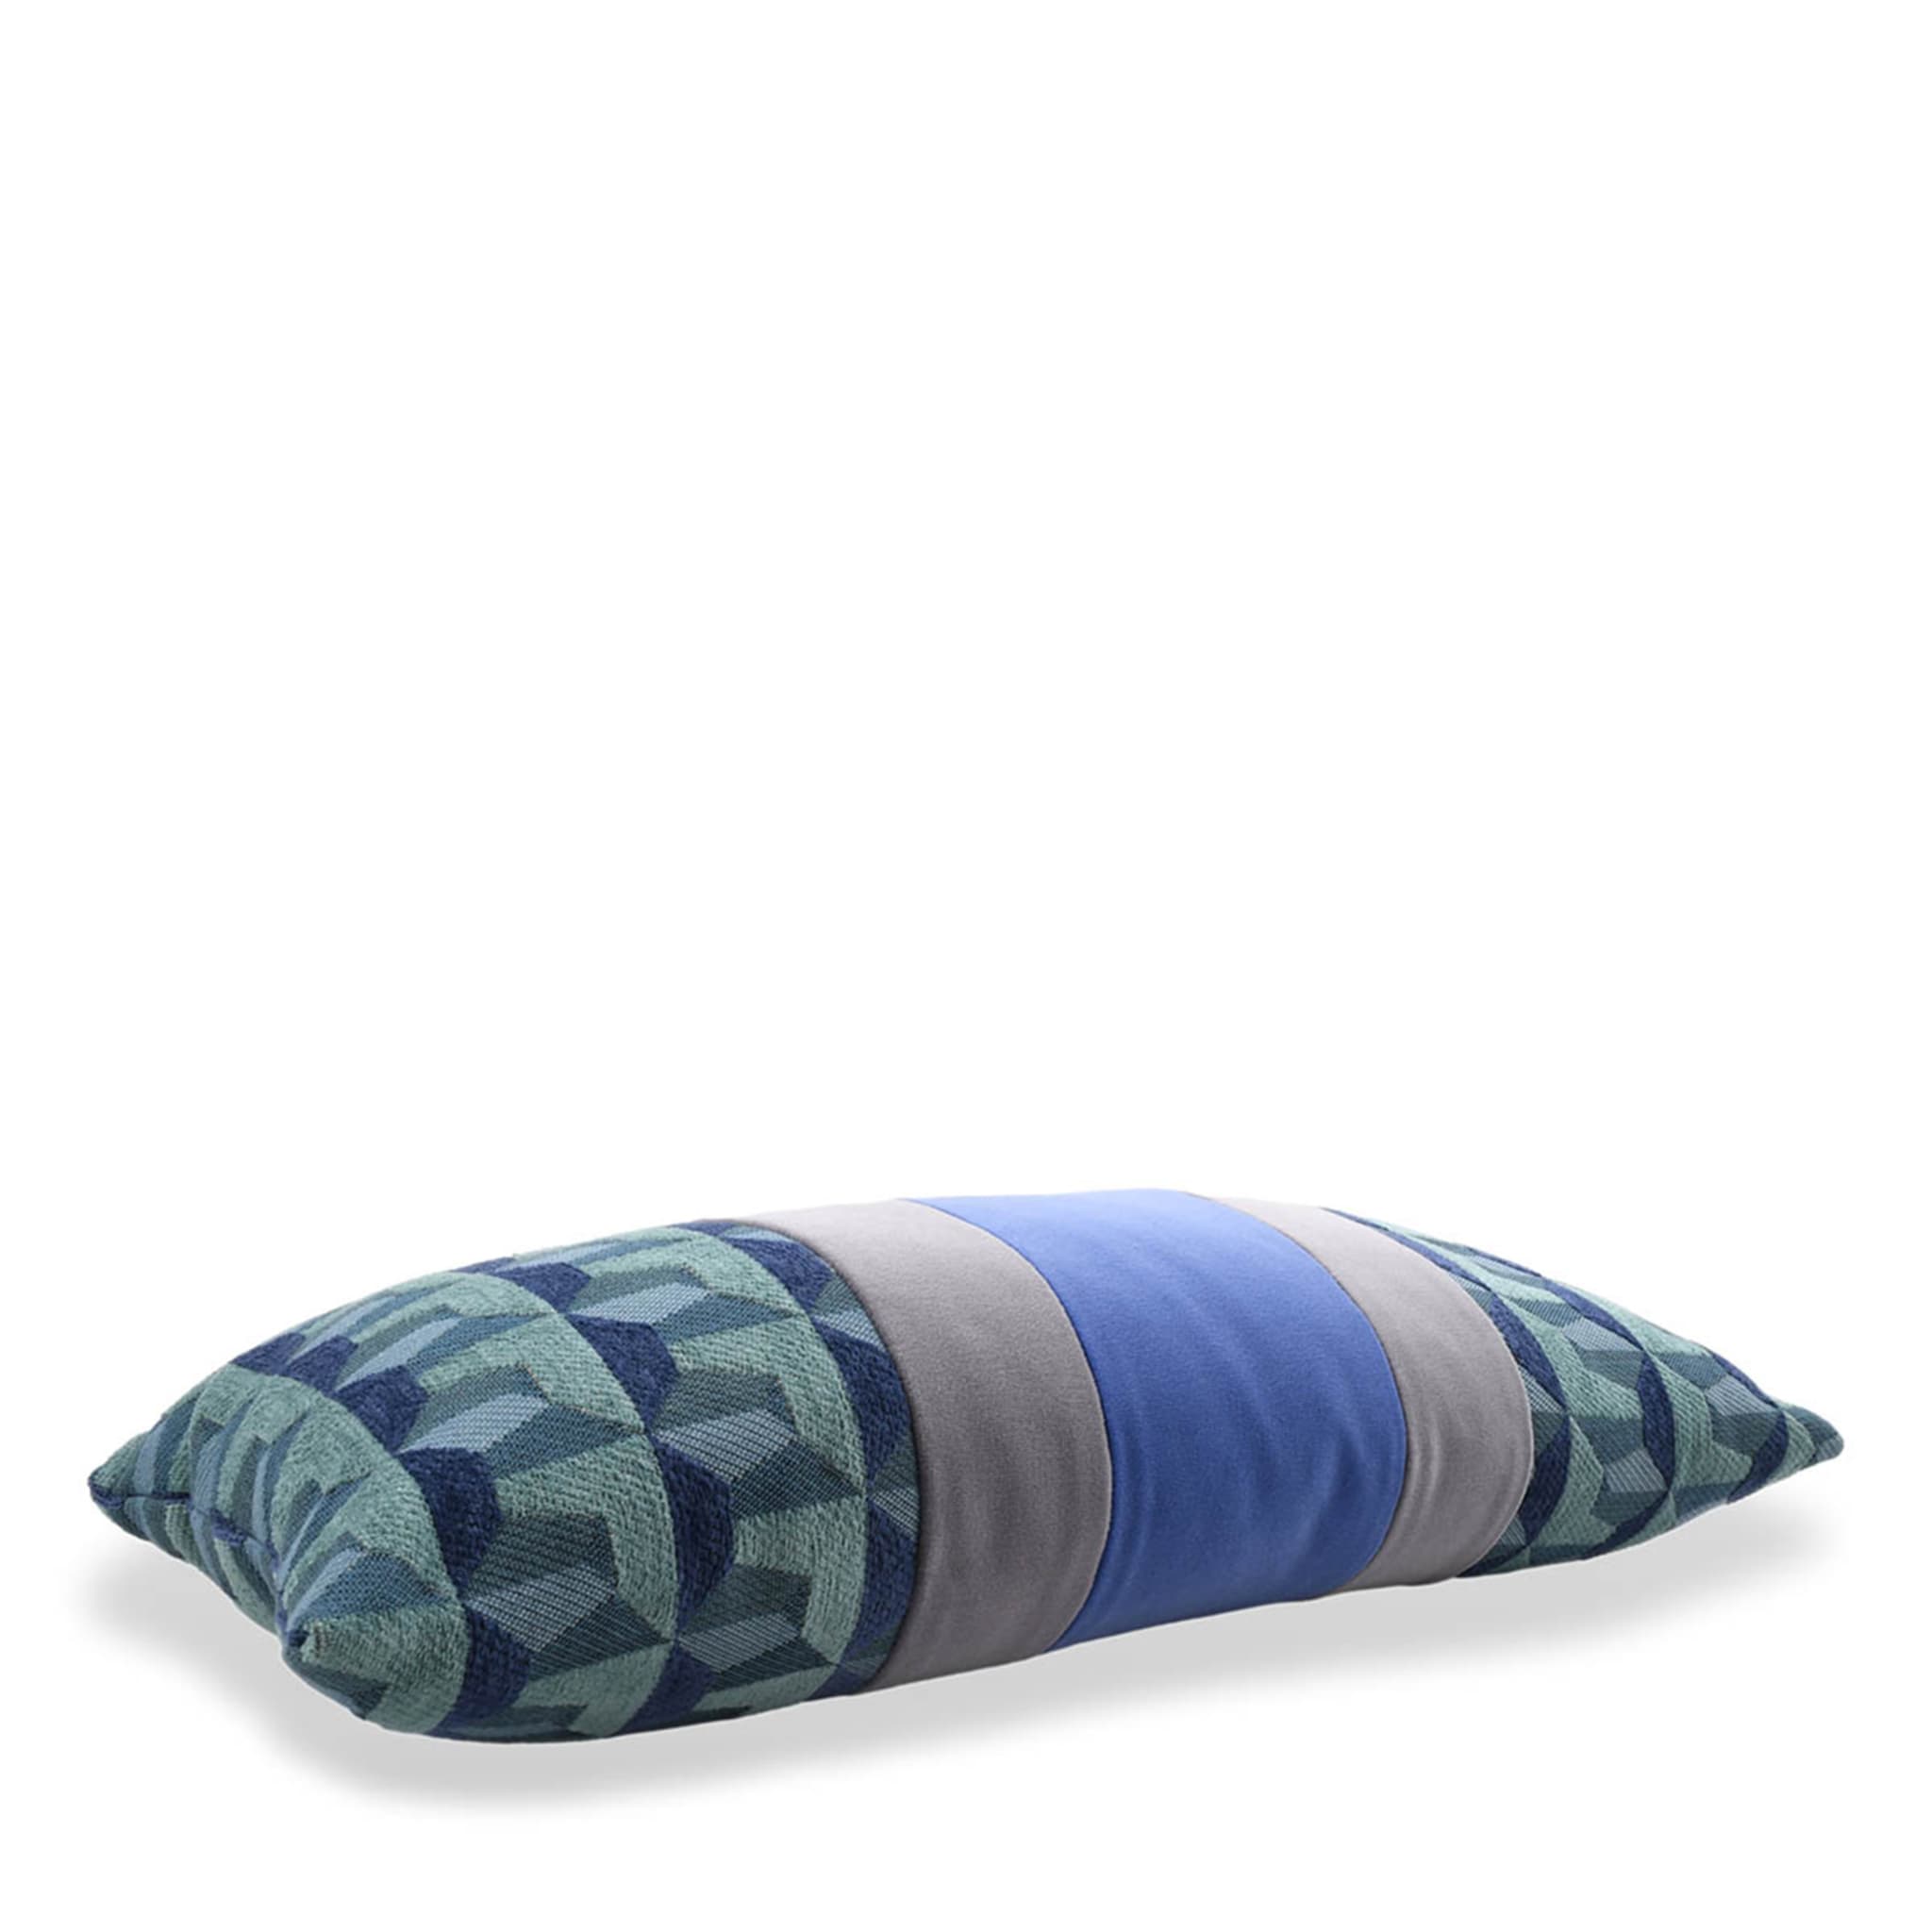 Rectangular Nastro Cushion in geometric jacquard fabric - Alternative view 1